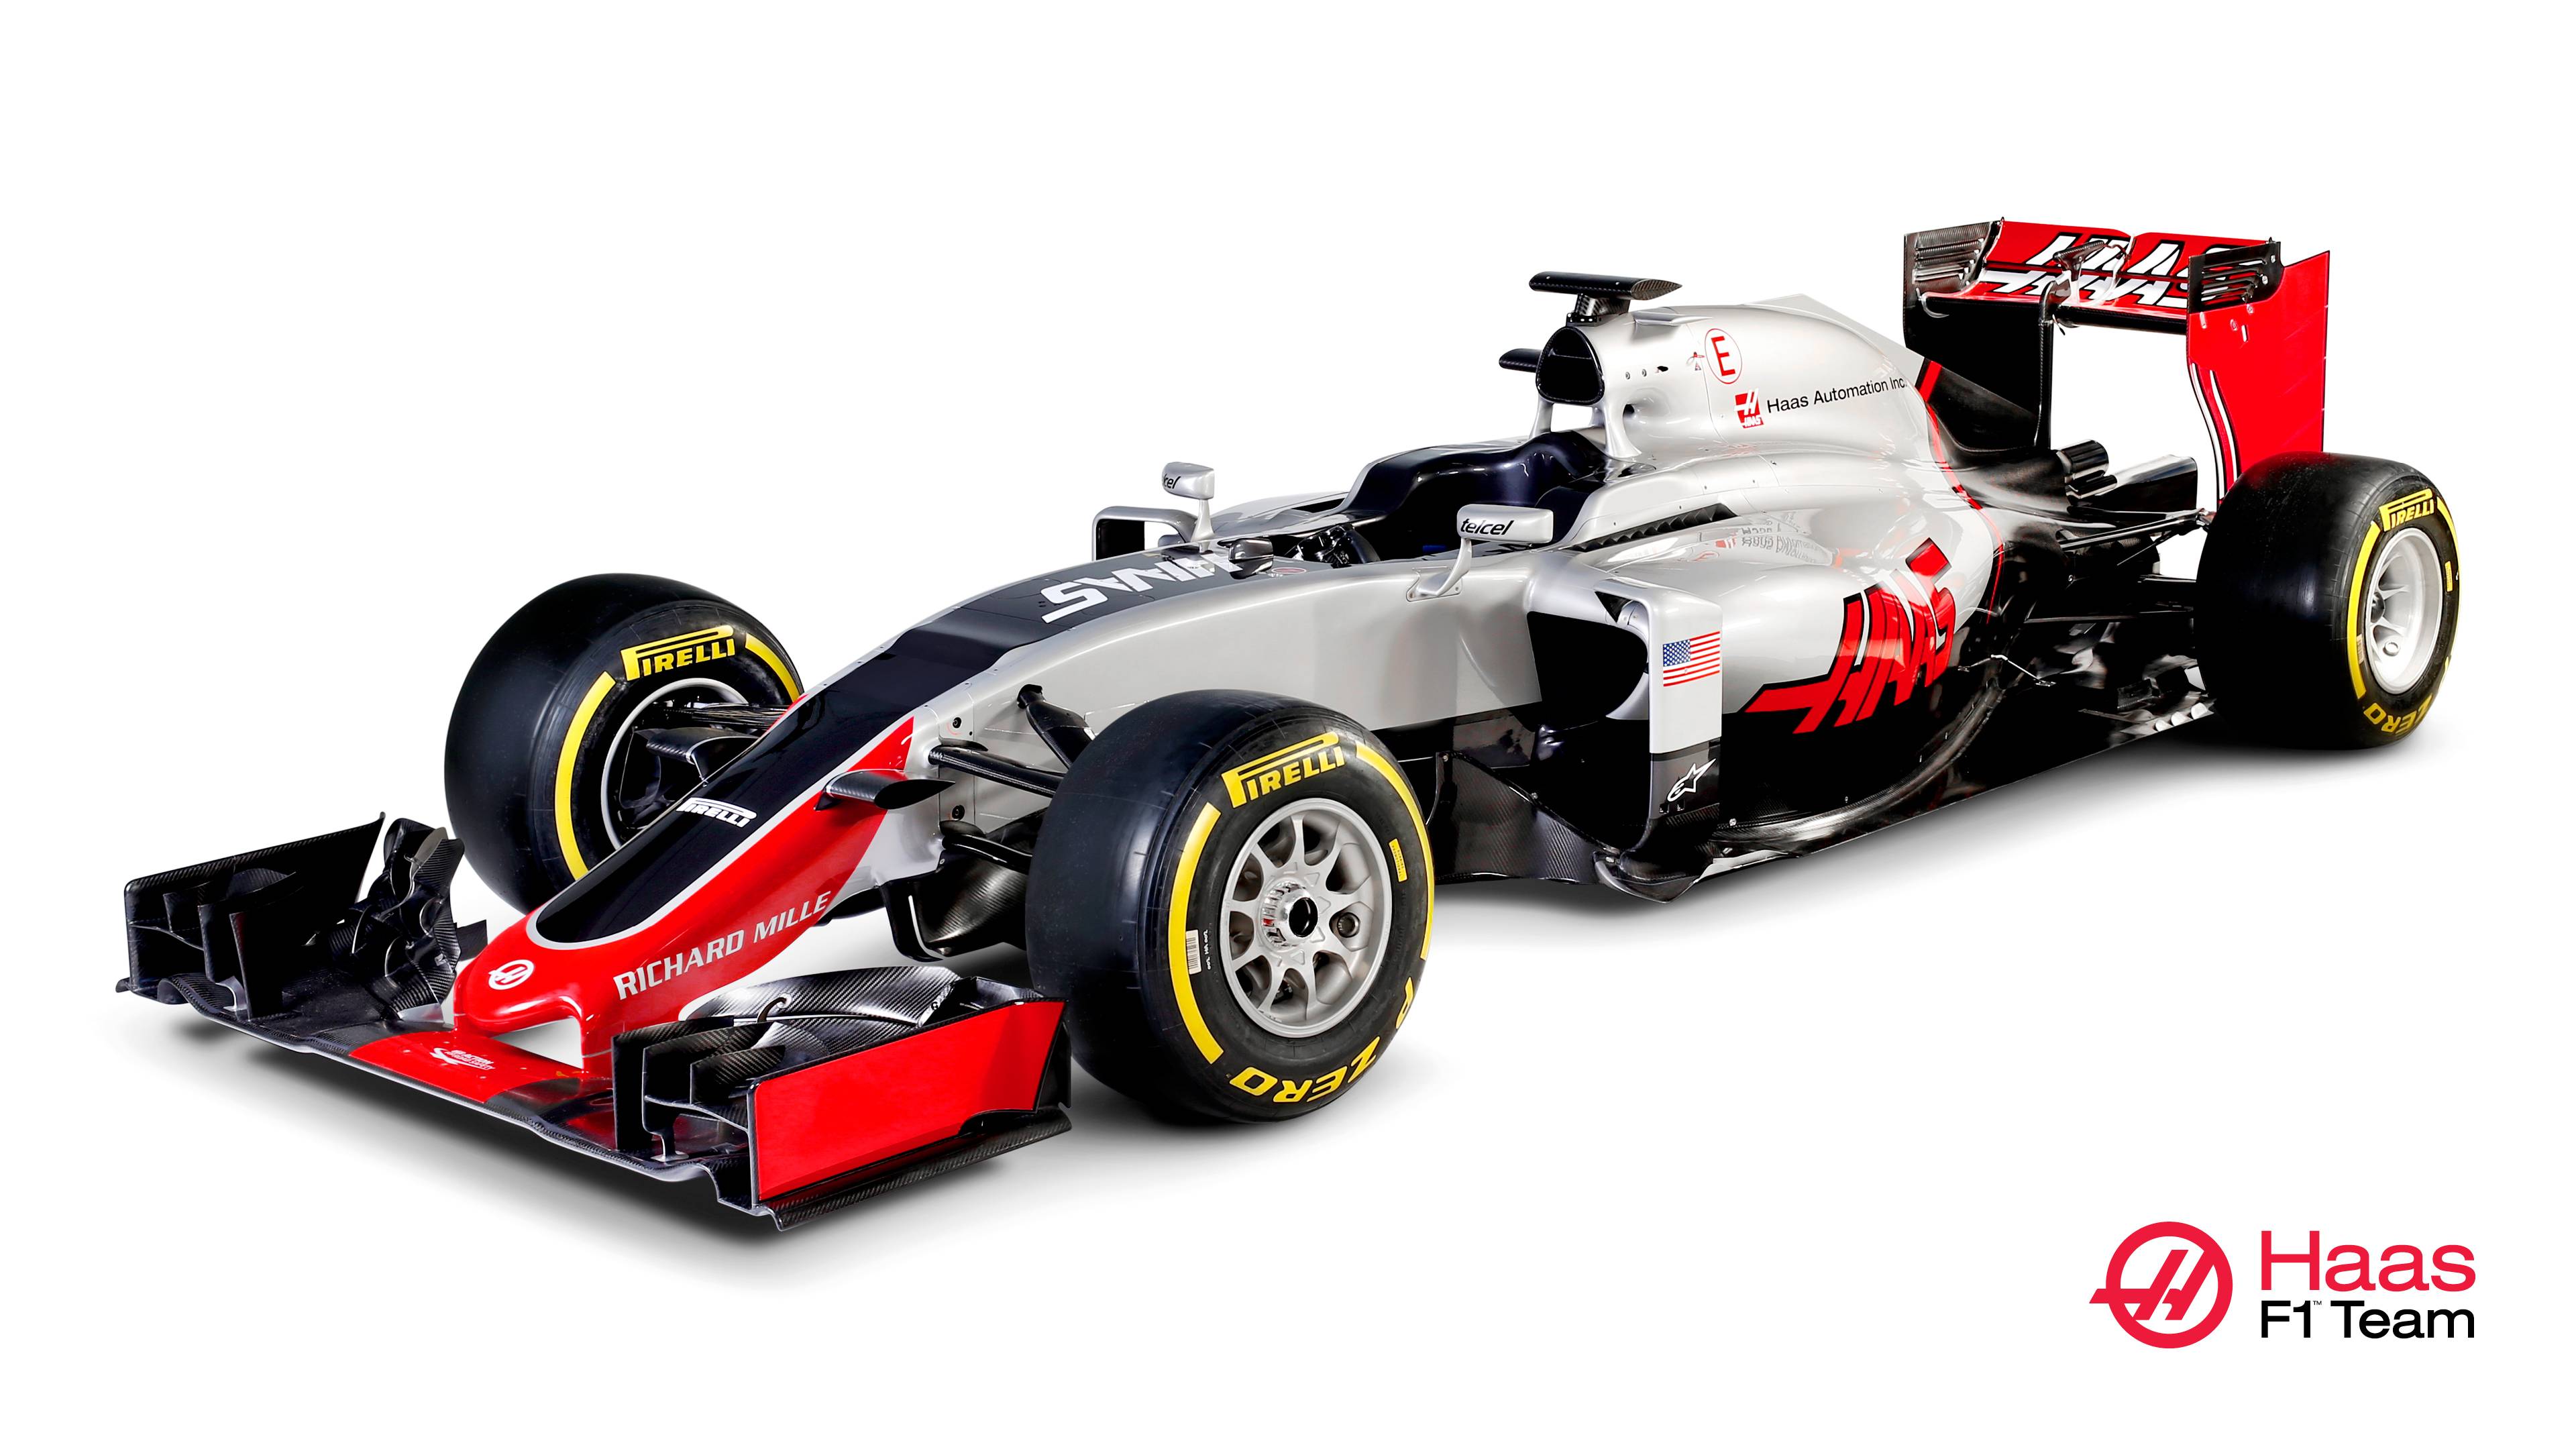 Richard Mille Announces Historic Partnership With Haas F1 Team